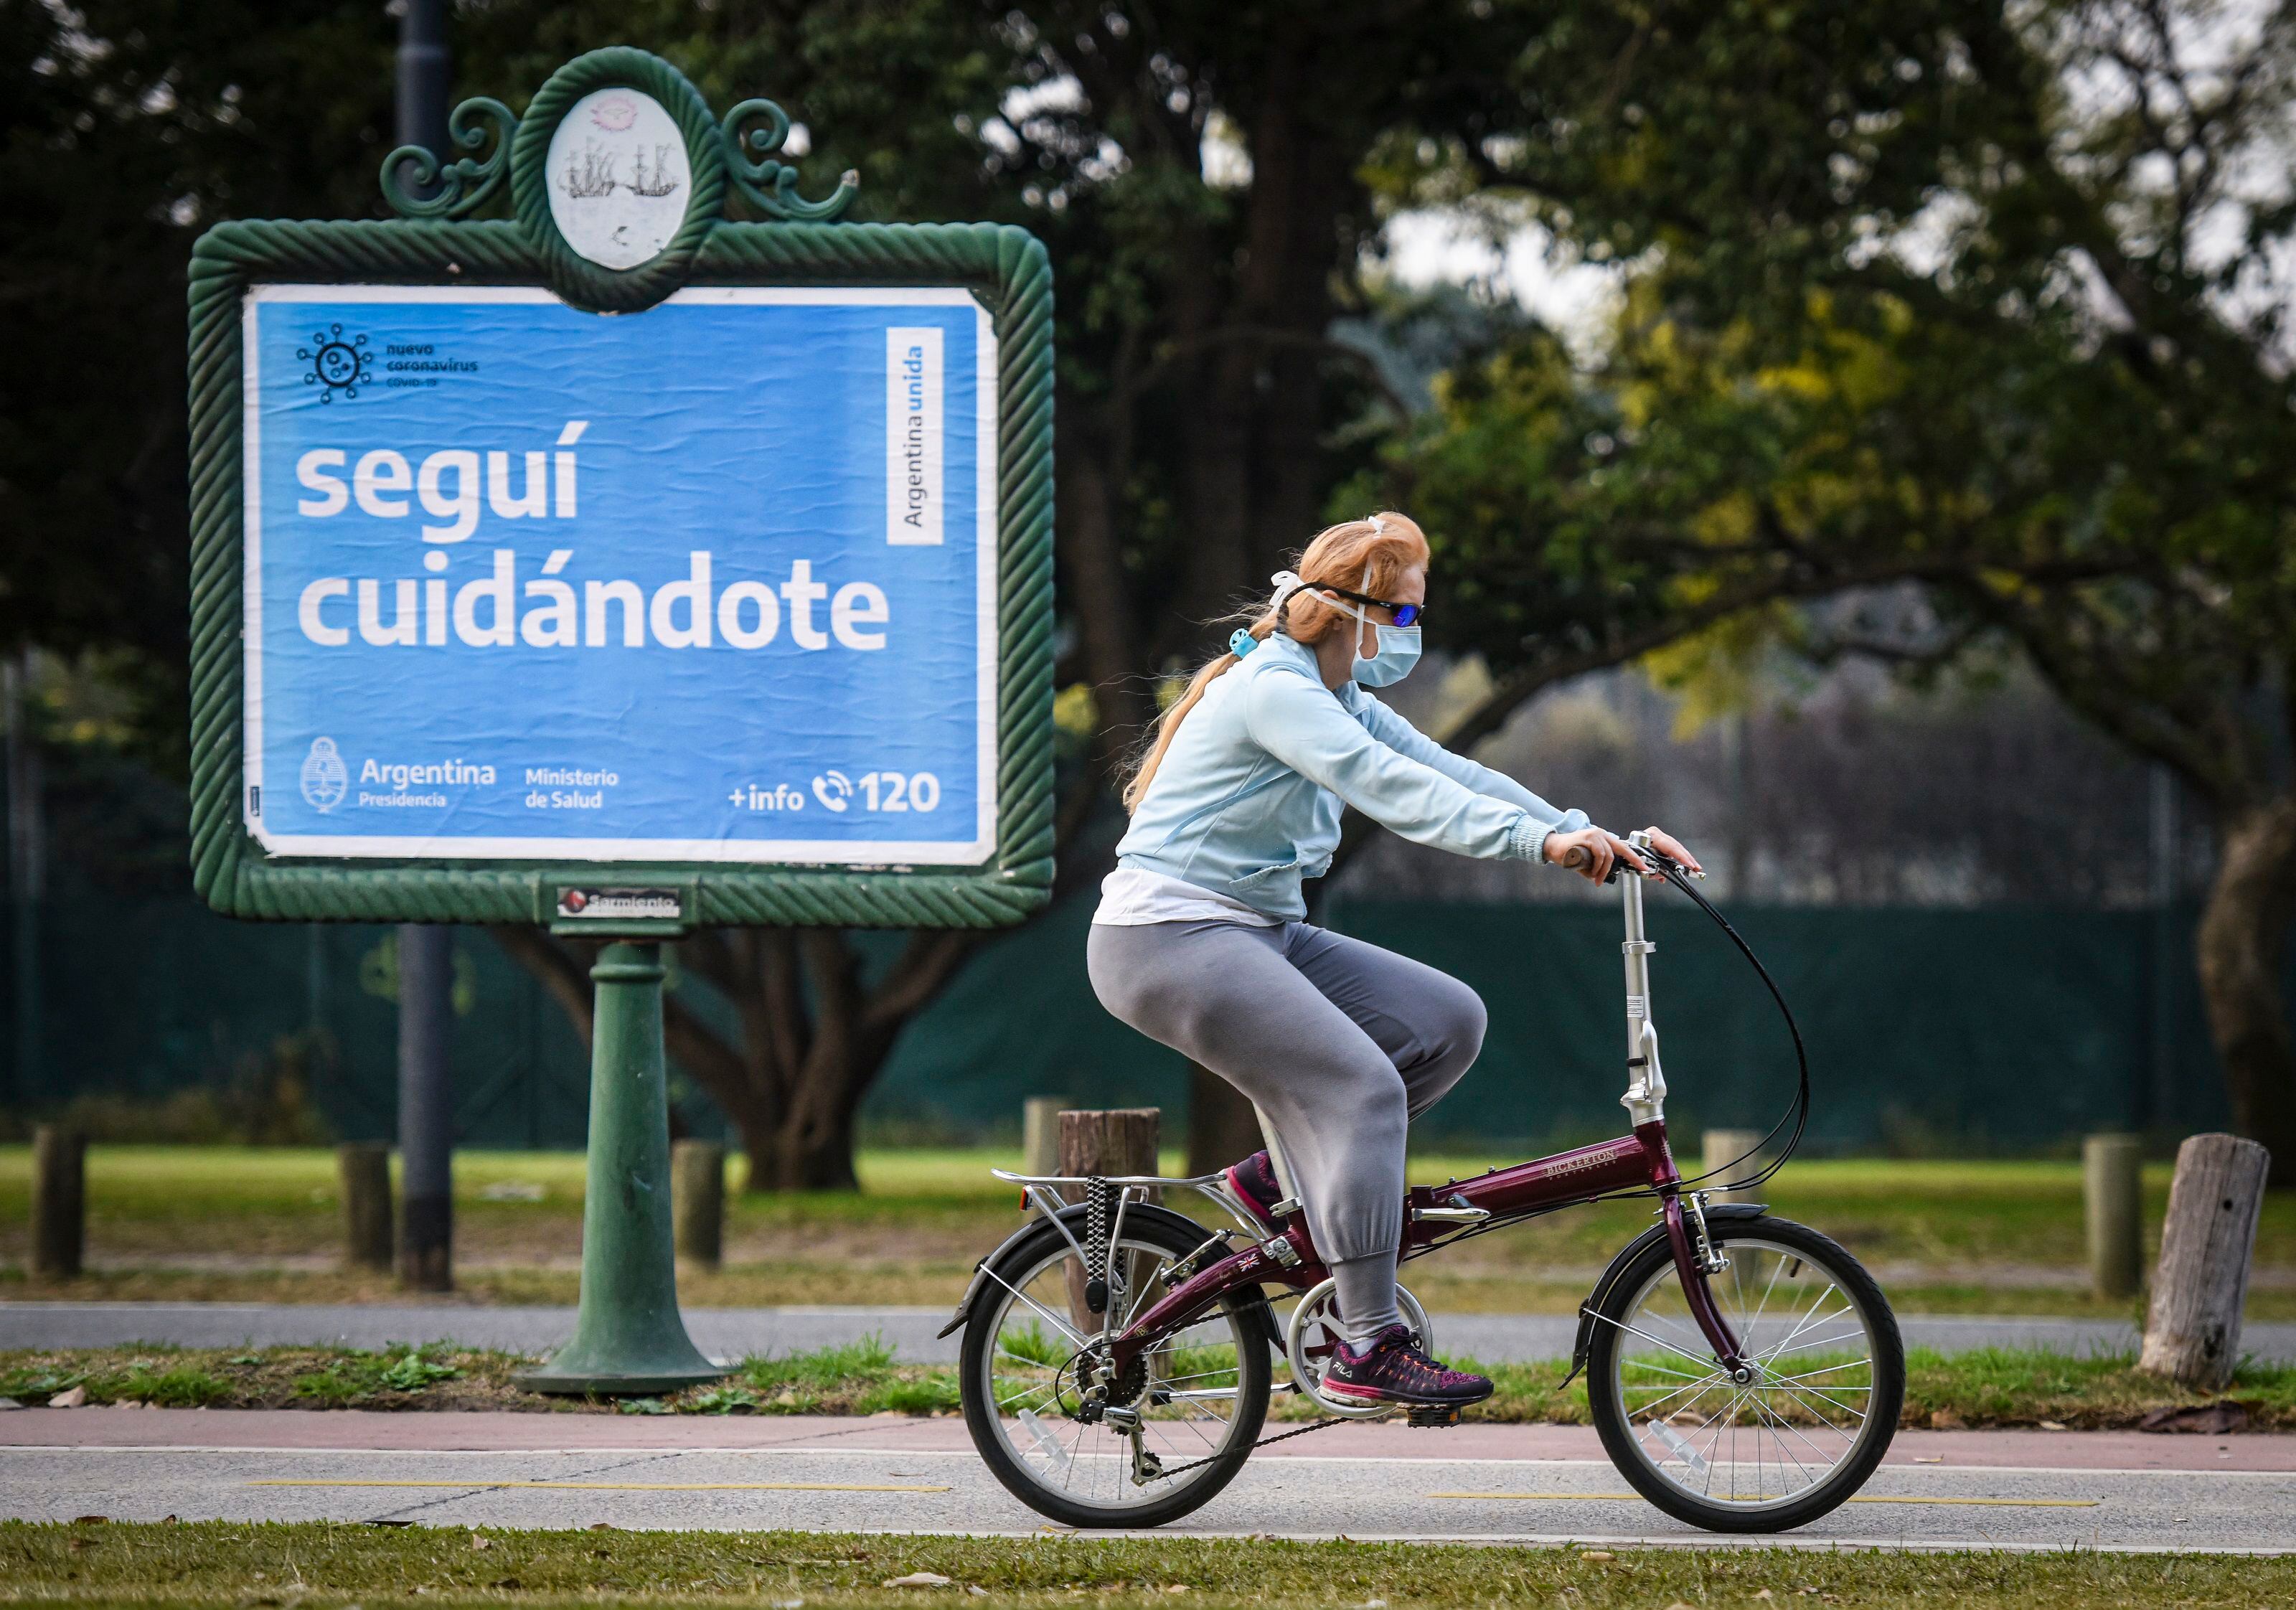 20/07/2020 Una mujer con mascarilla pasea en bicicleta.
POLITICA 
MARCELO ENDELLI
